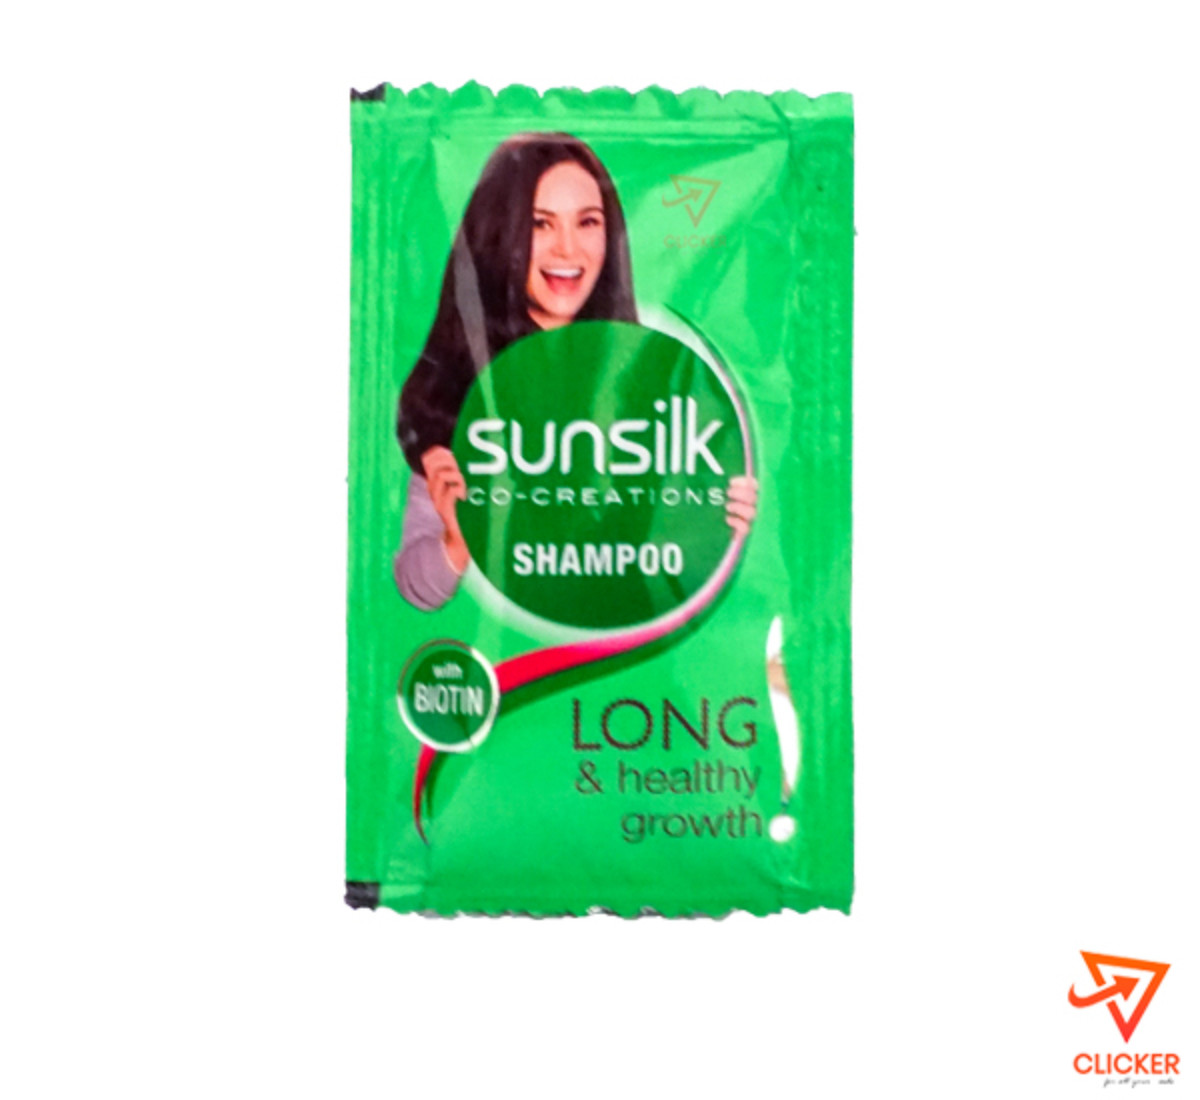 Clicker product 6ml Sunsilk co-creations shampoo with biotin 819